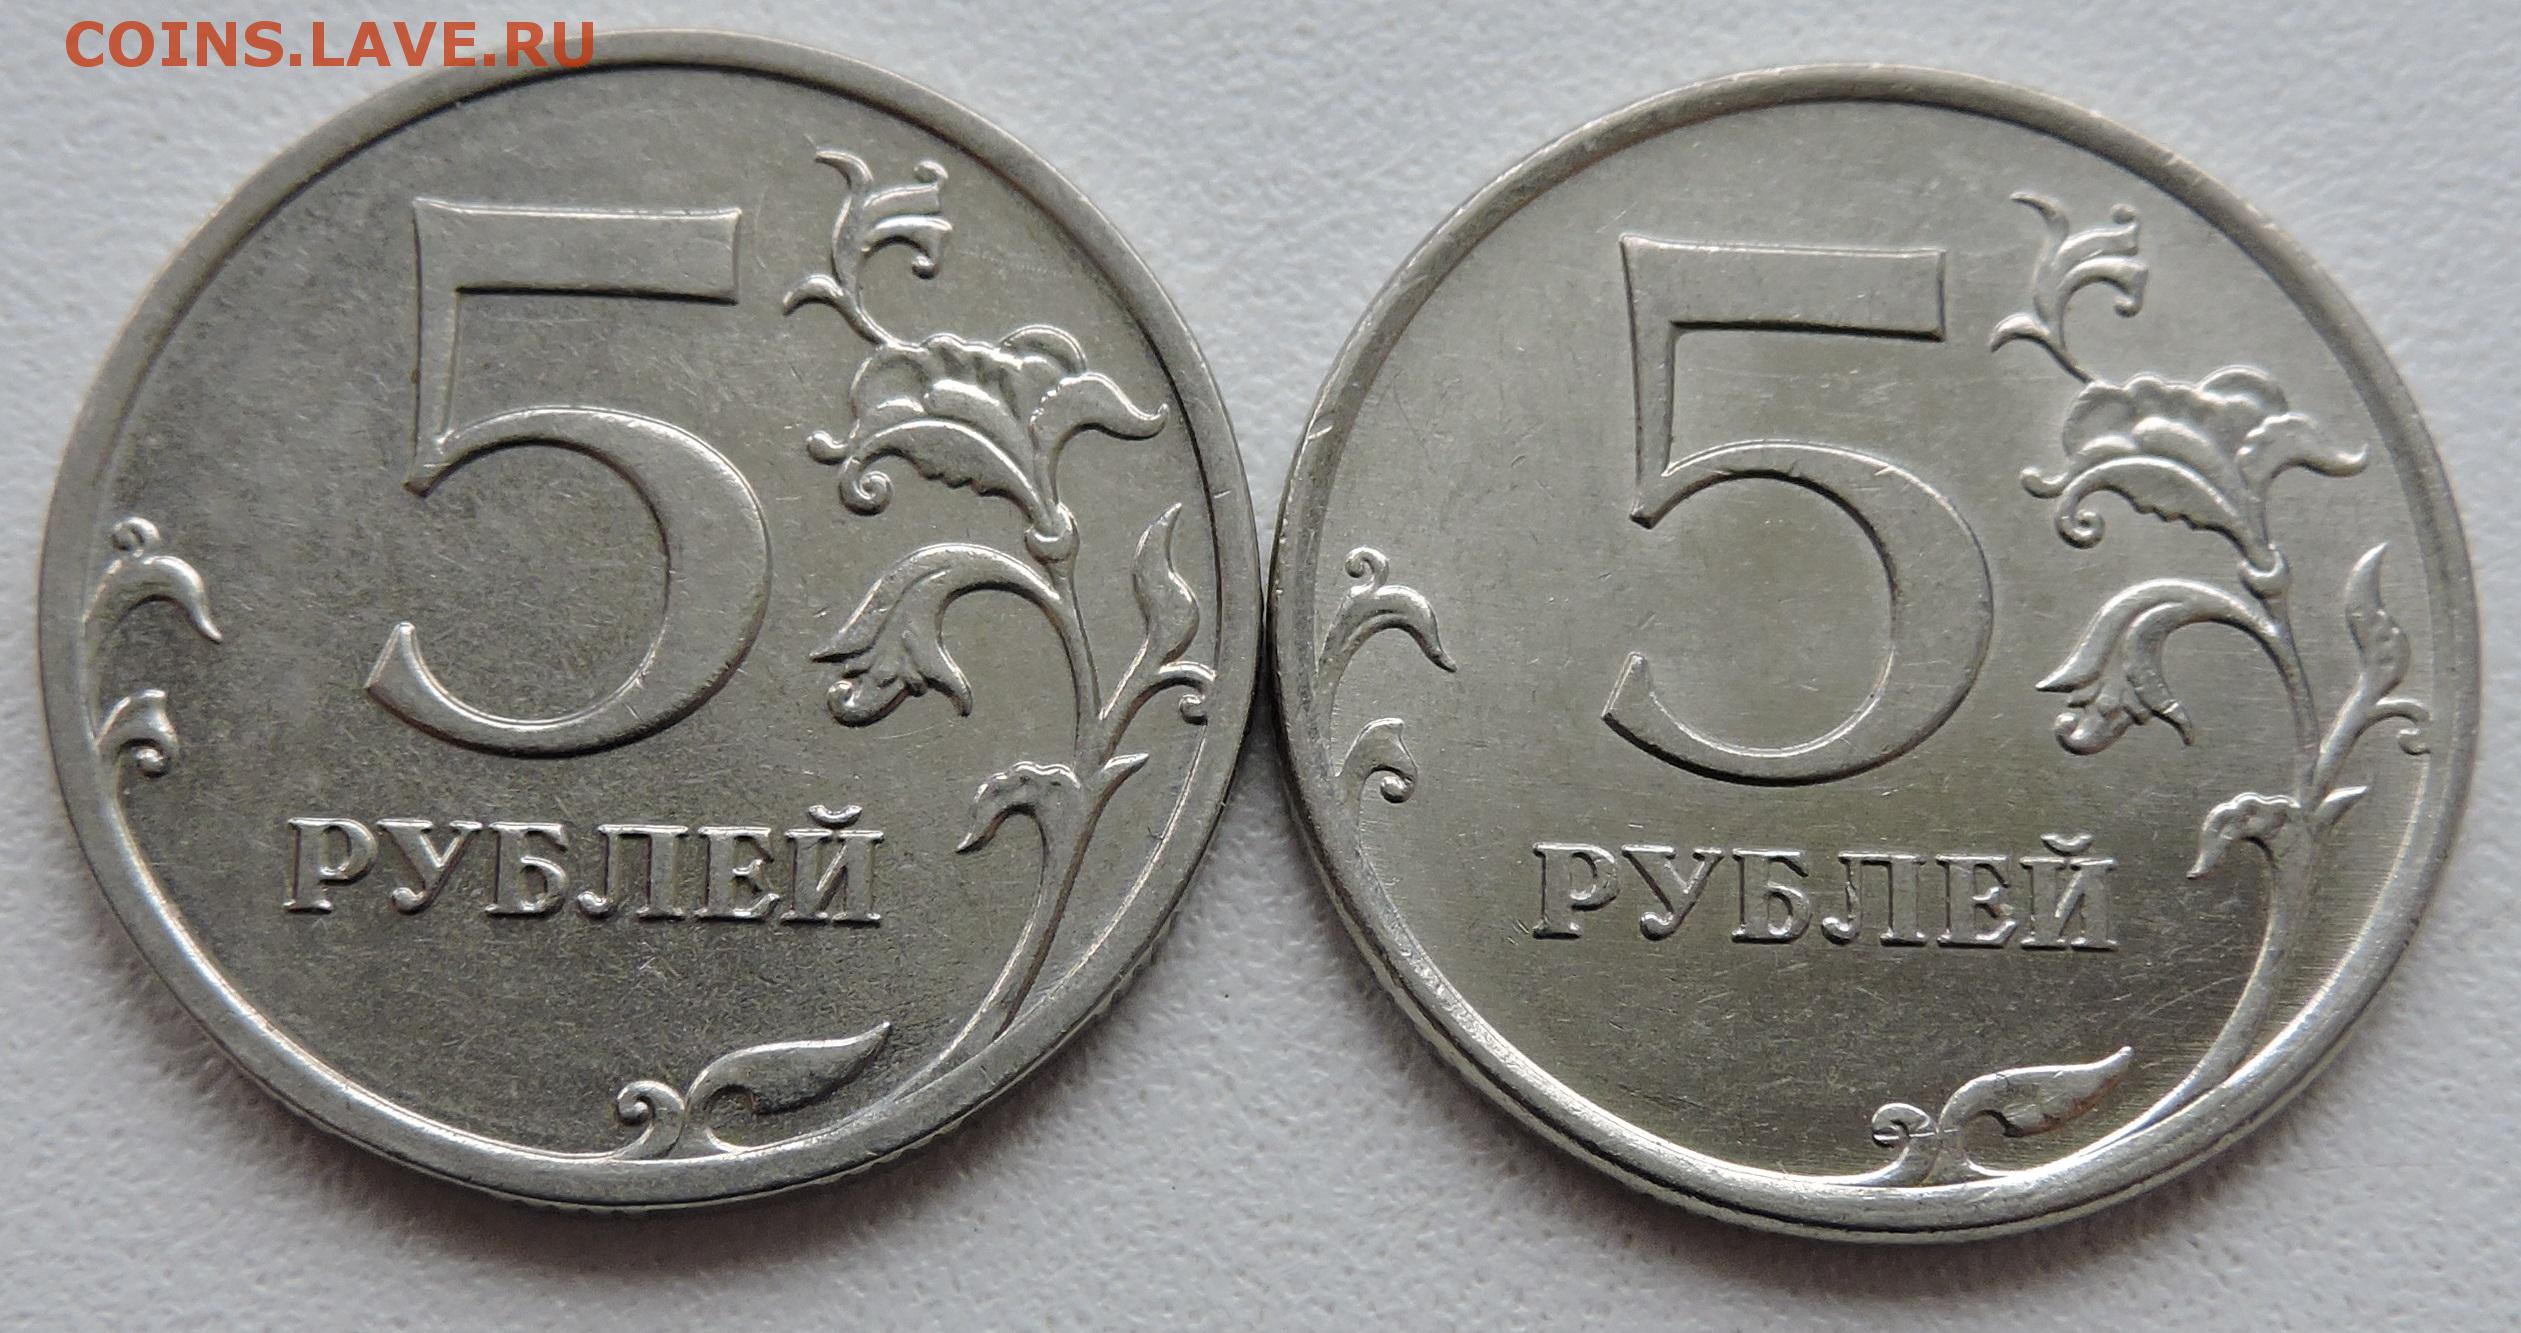 5 рублей 80. 5 Рублей 1998 ММД шт.а1 и шт.а2. 5 Рублей 2008 ММД. Монета 5 рублей 1998 ММД XF. 5 Рублей 2008 СПМД.